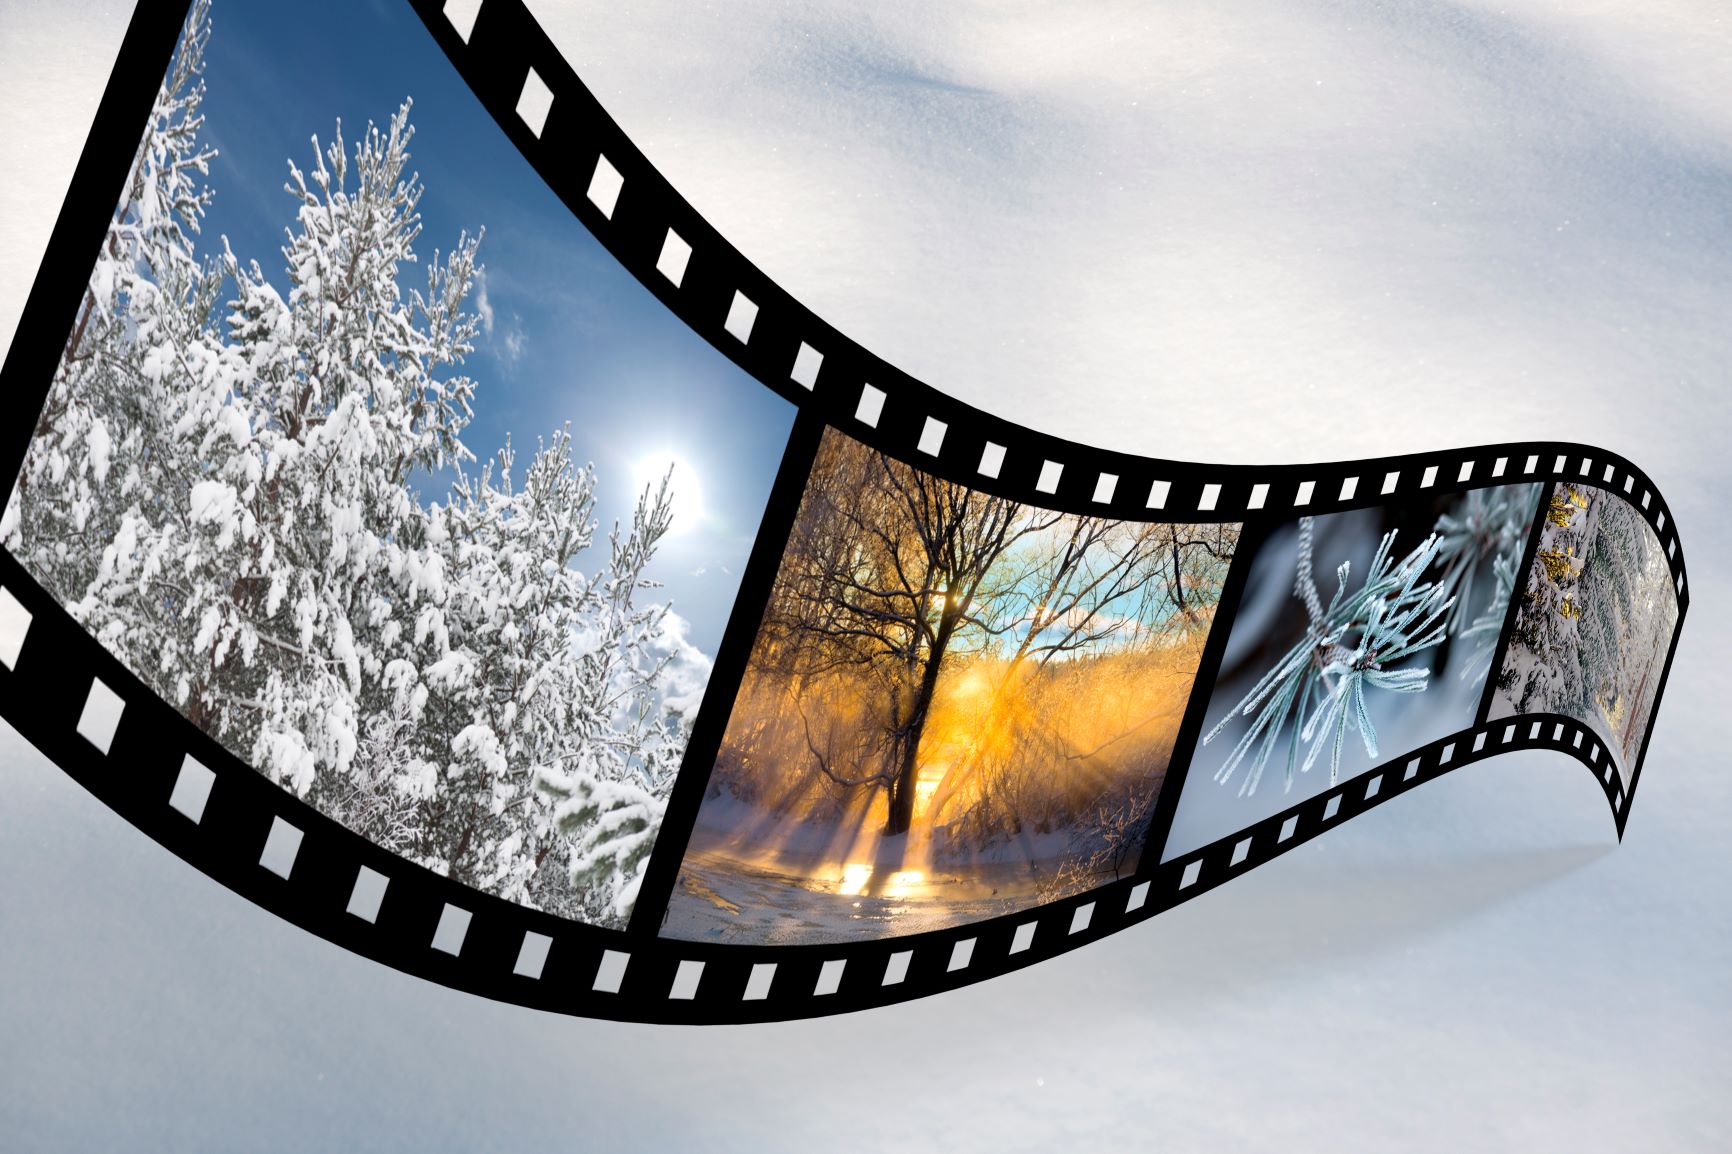 camera roll showing winter scenes